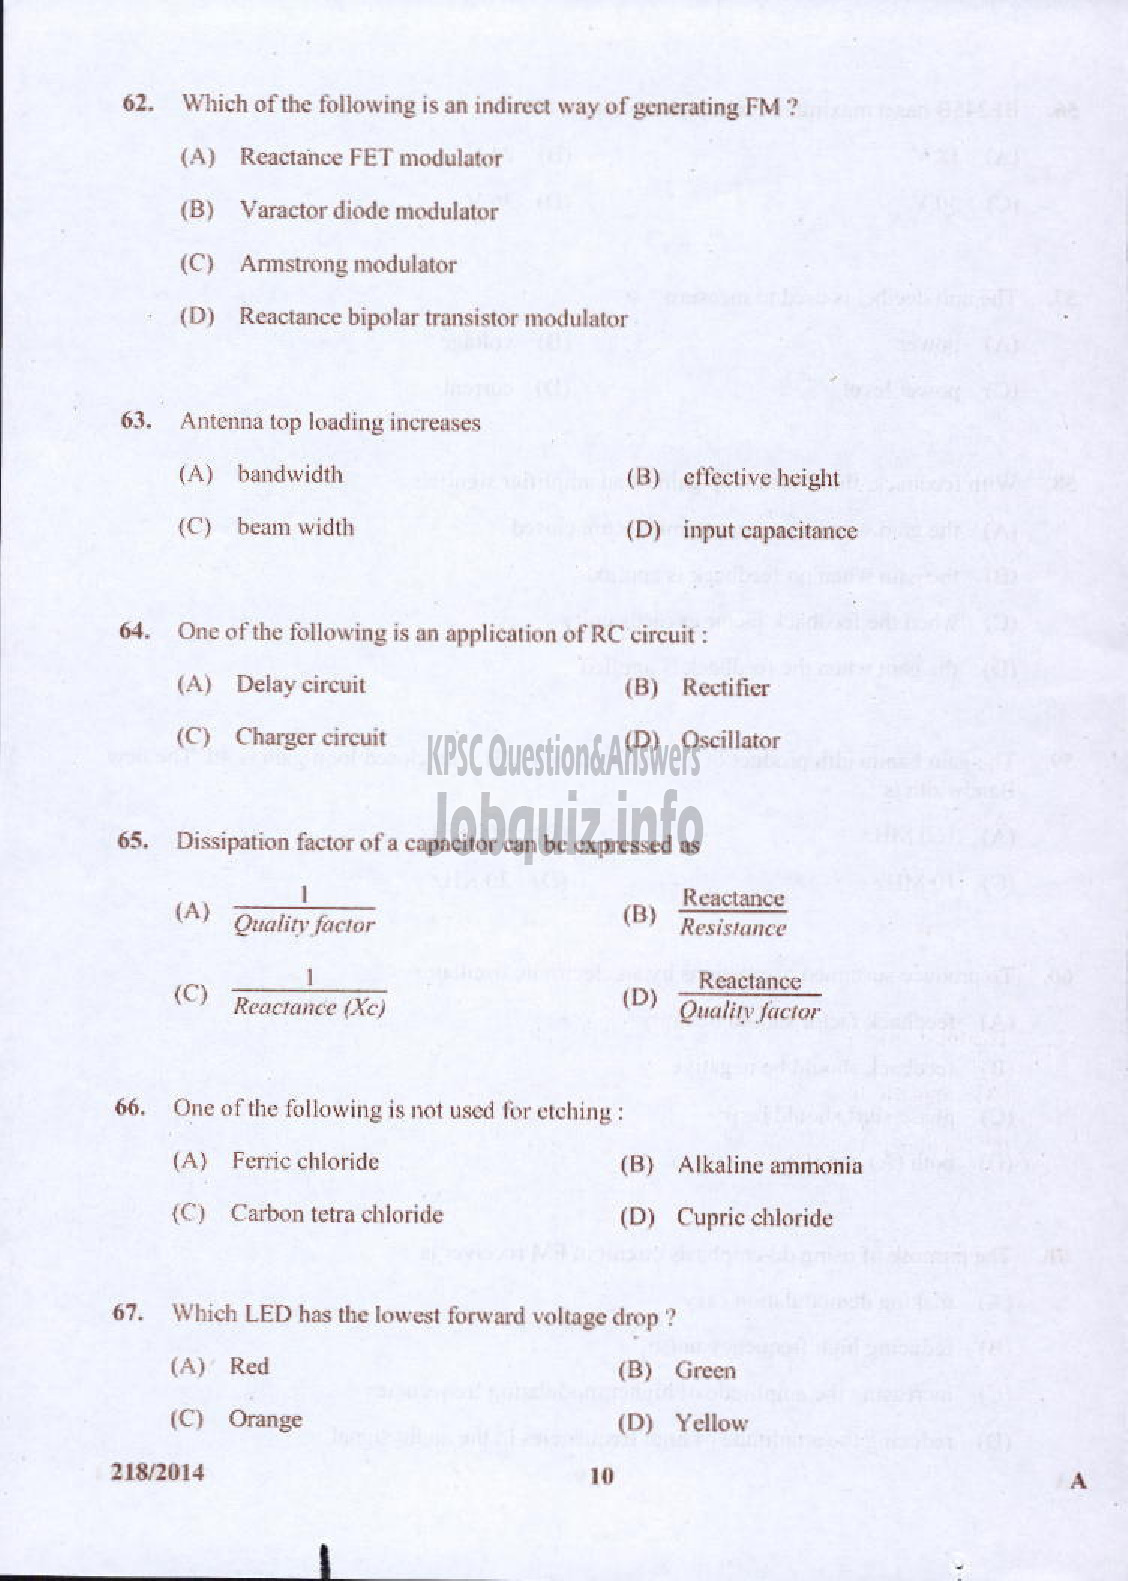 Kerala PSC Question Paper - LABORATORY TECHNICAL ASSISTANT MRRTV VHSE-10